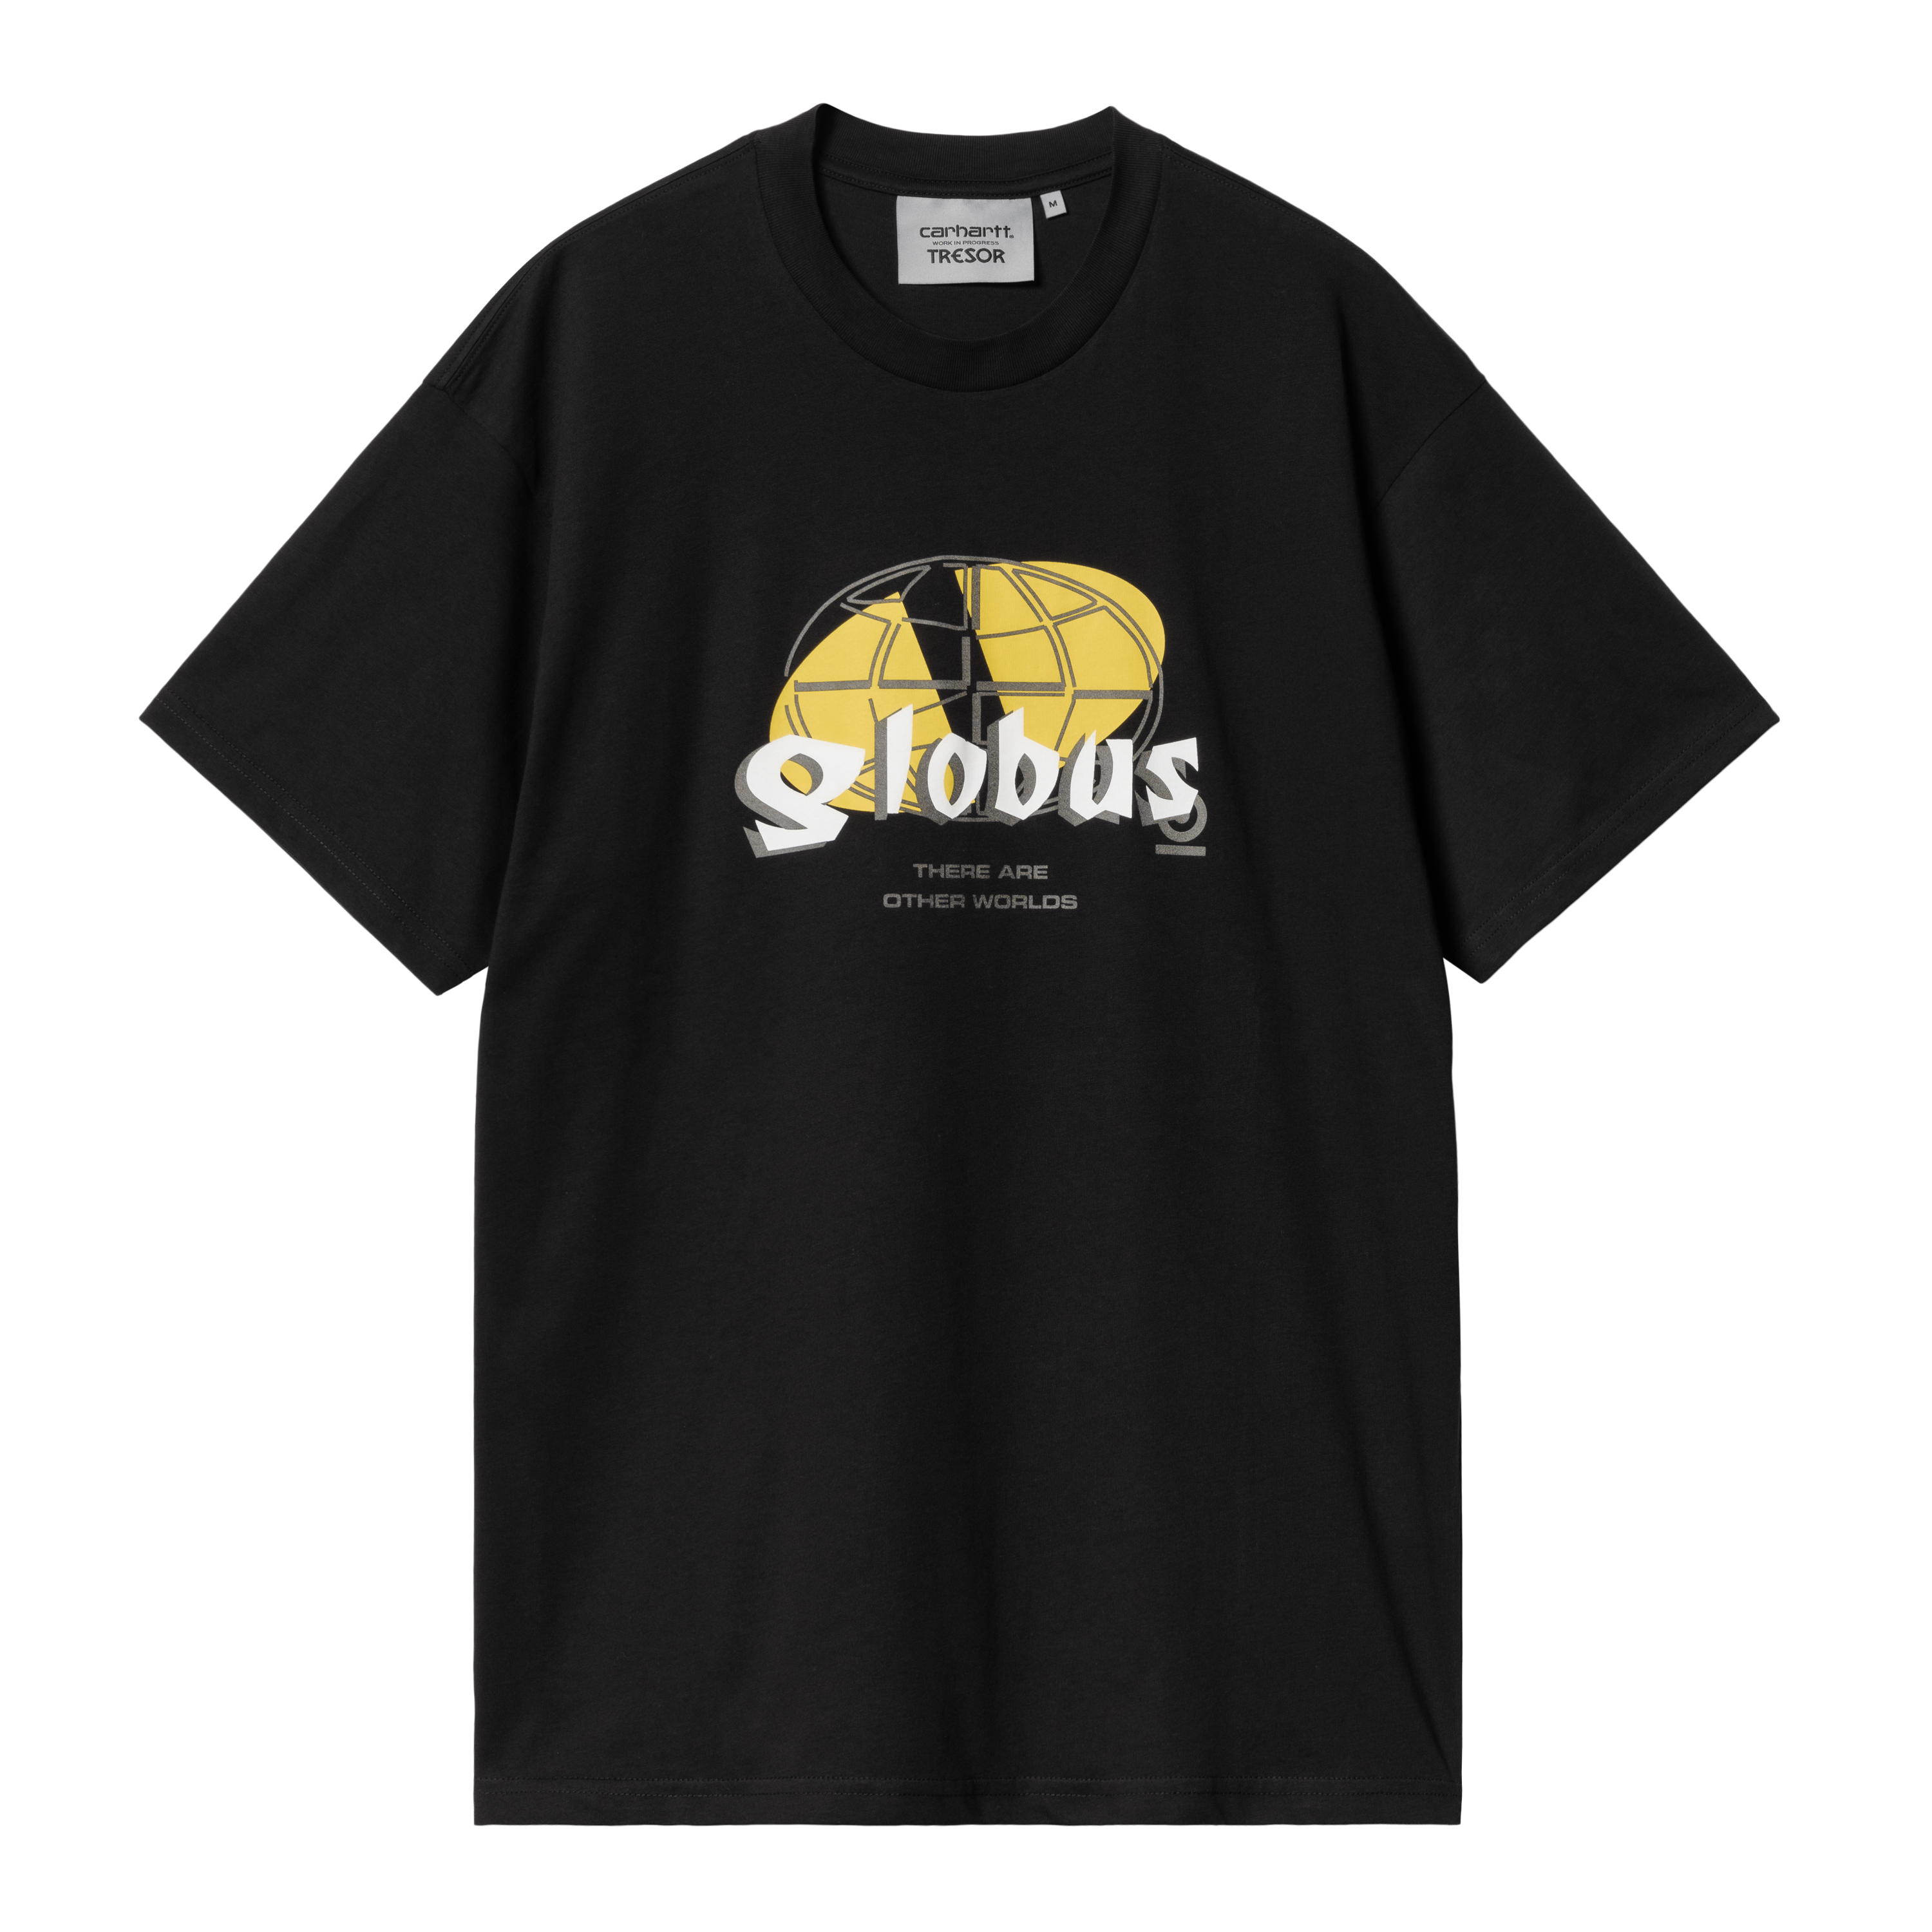 Carhartt WIP Carhartt WIP x TRESOR Globus Short Sleeve T-Shirt in Black